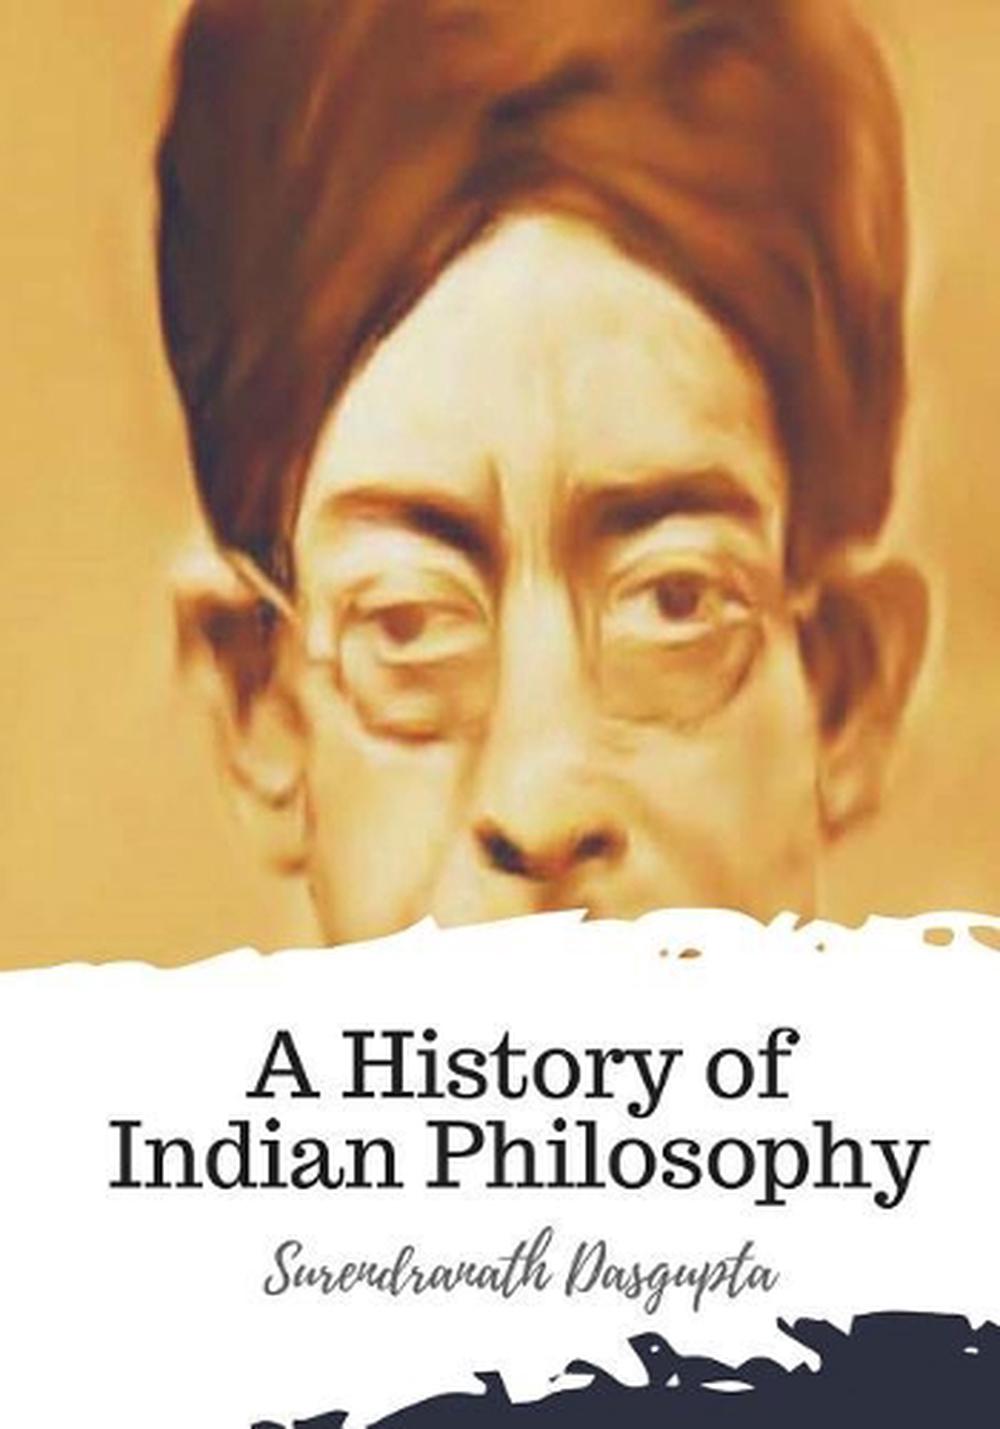 phd in indian philosophy